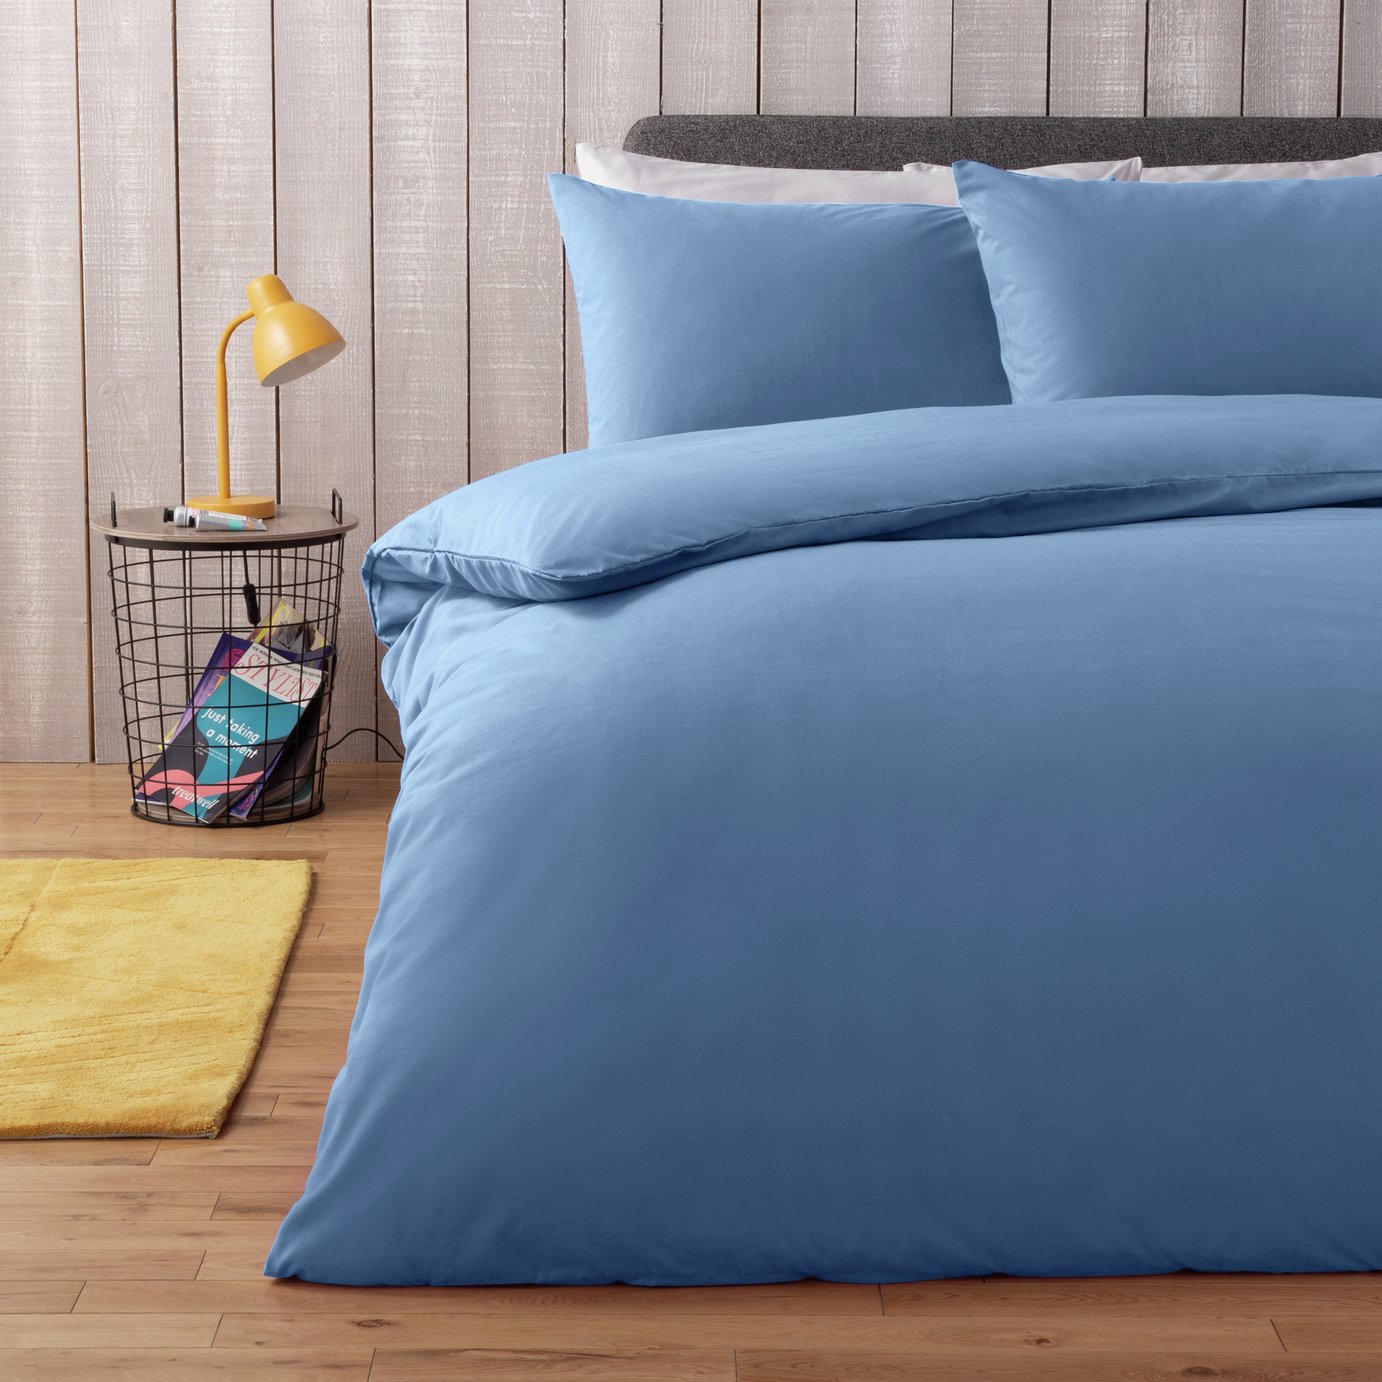 Argos Home Easycare Plain Blue Bedding Set - Double